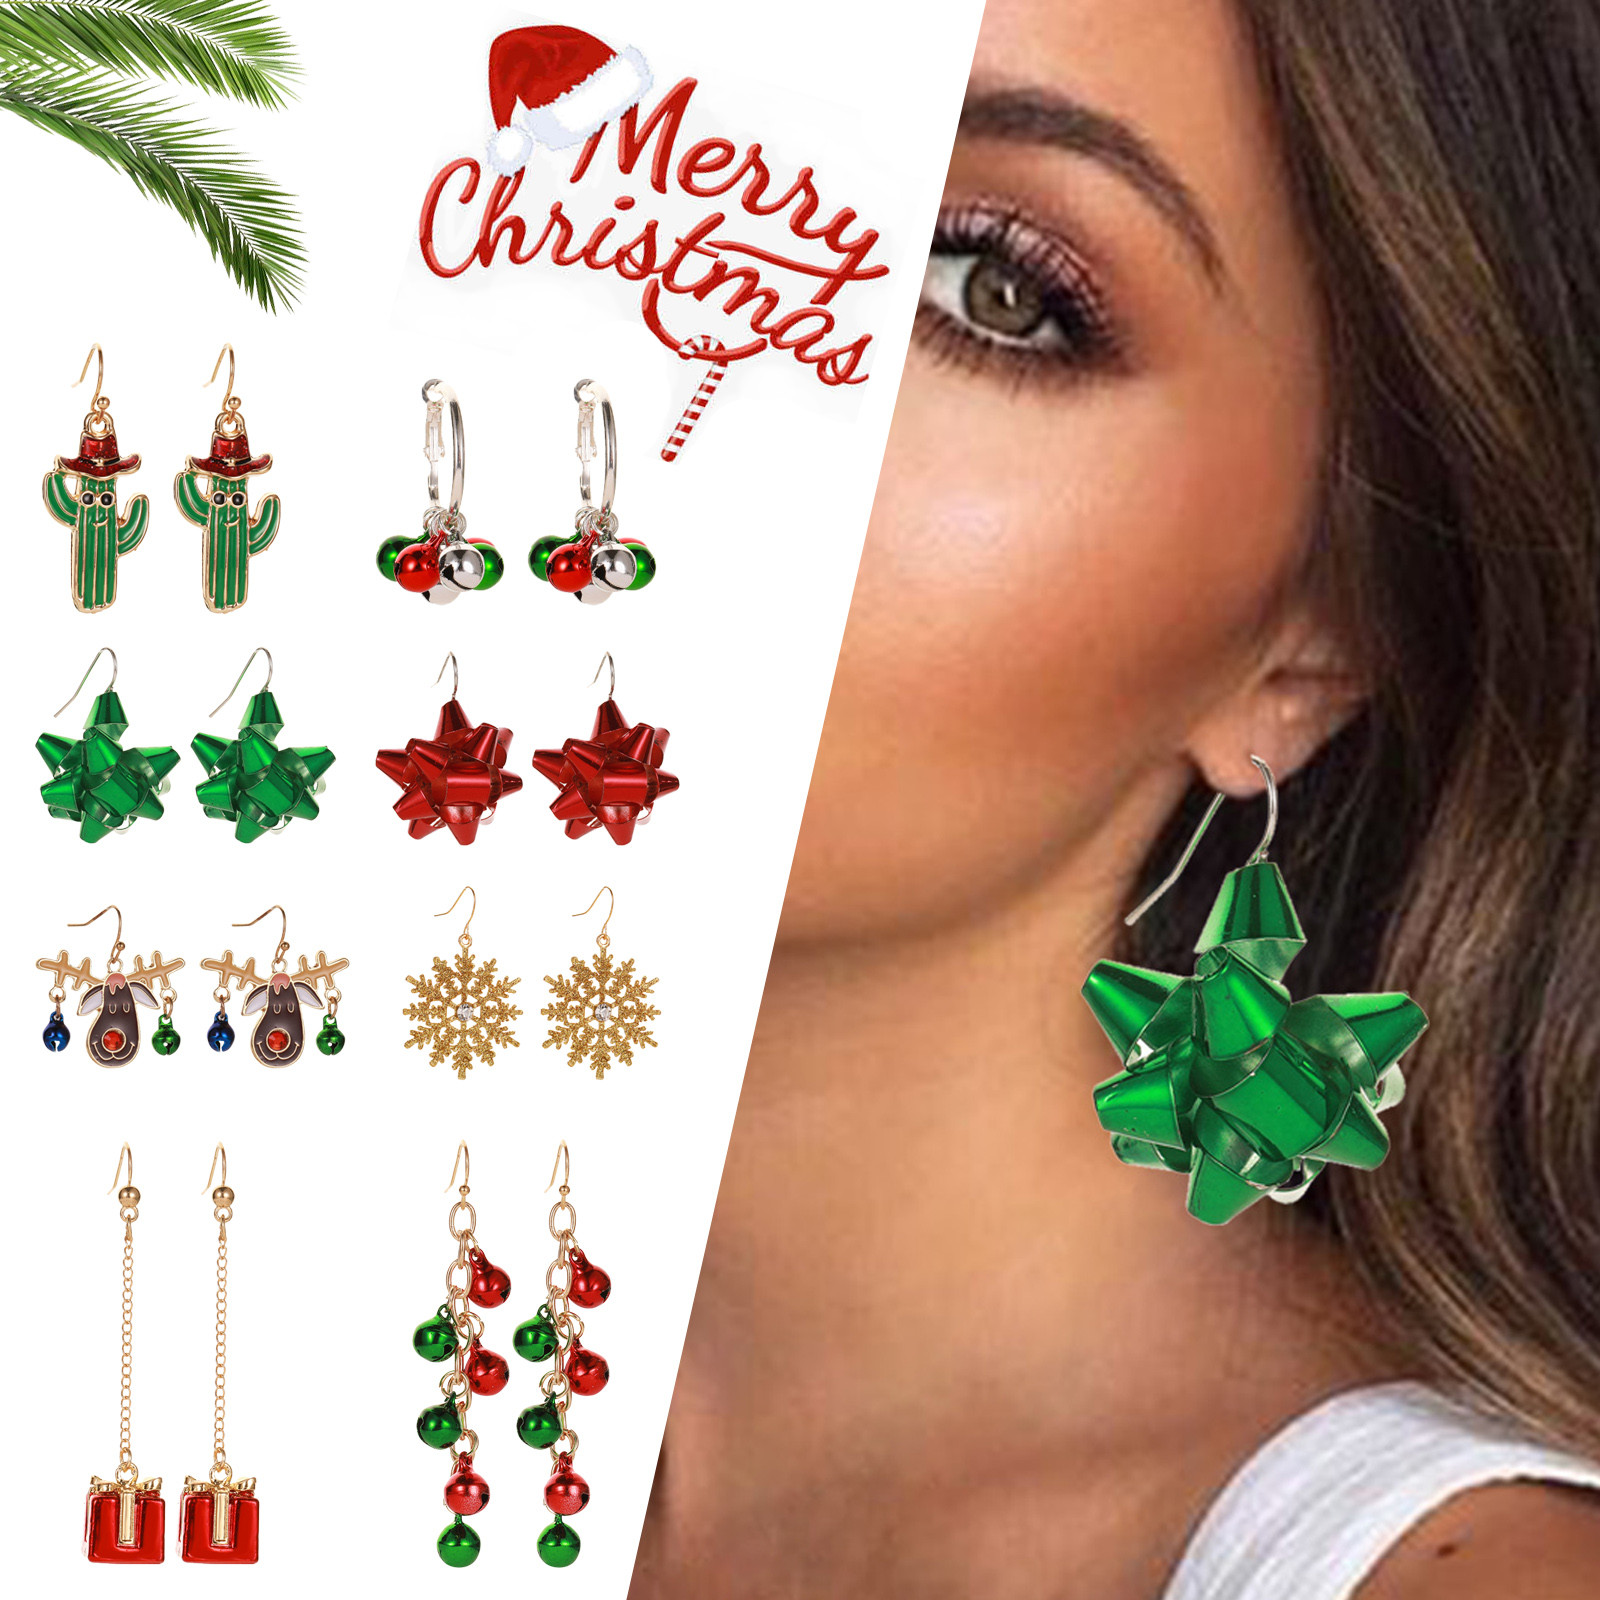 Kayannuo Christmas Clearance Women Fashion Earrings Christmas Earrings Cute Festive Jewelry Ear Wrap Christmas Gifts For Women - image 4 of 4